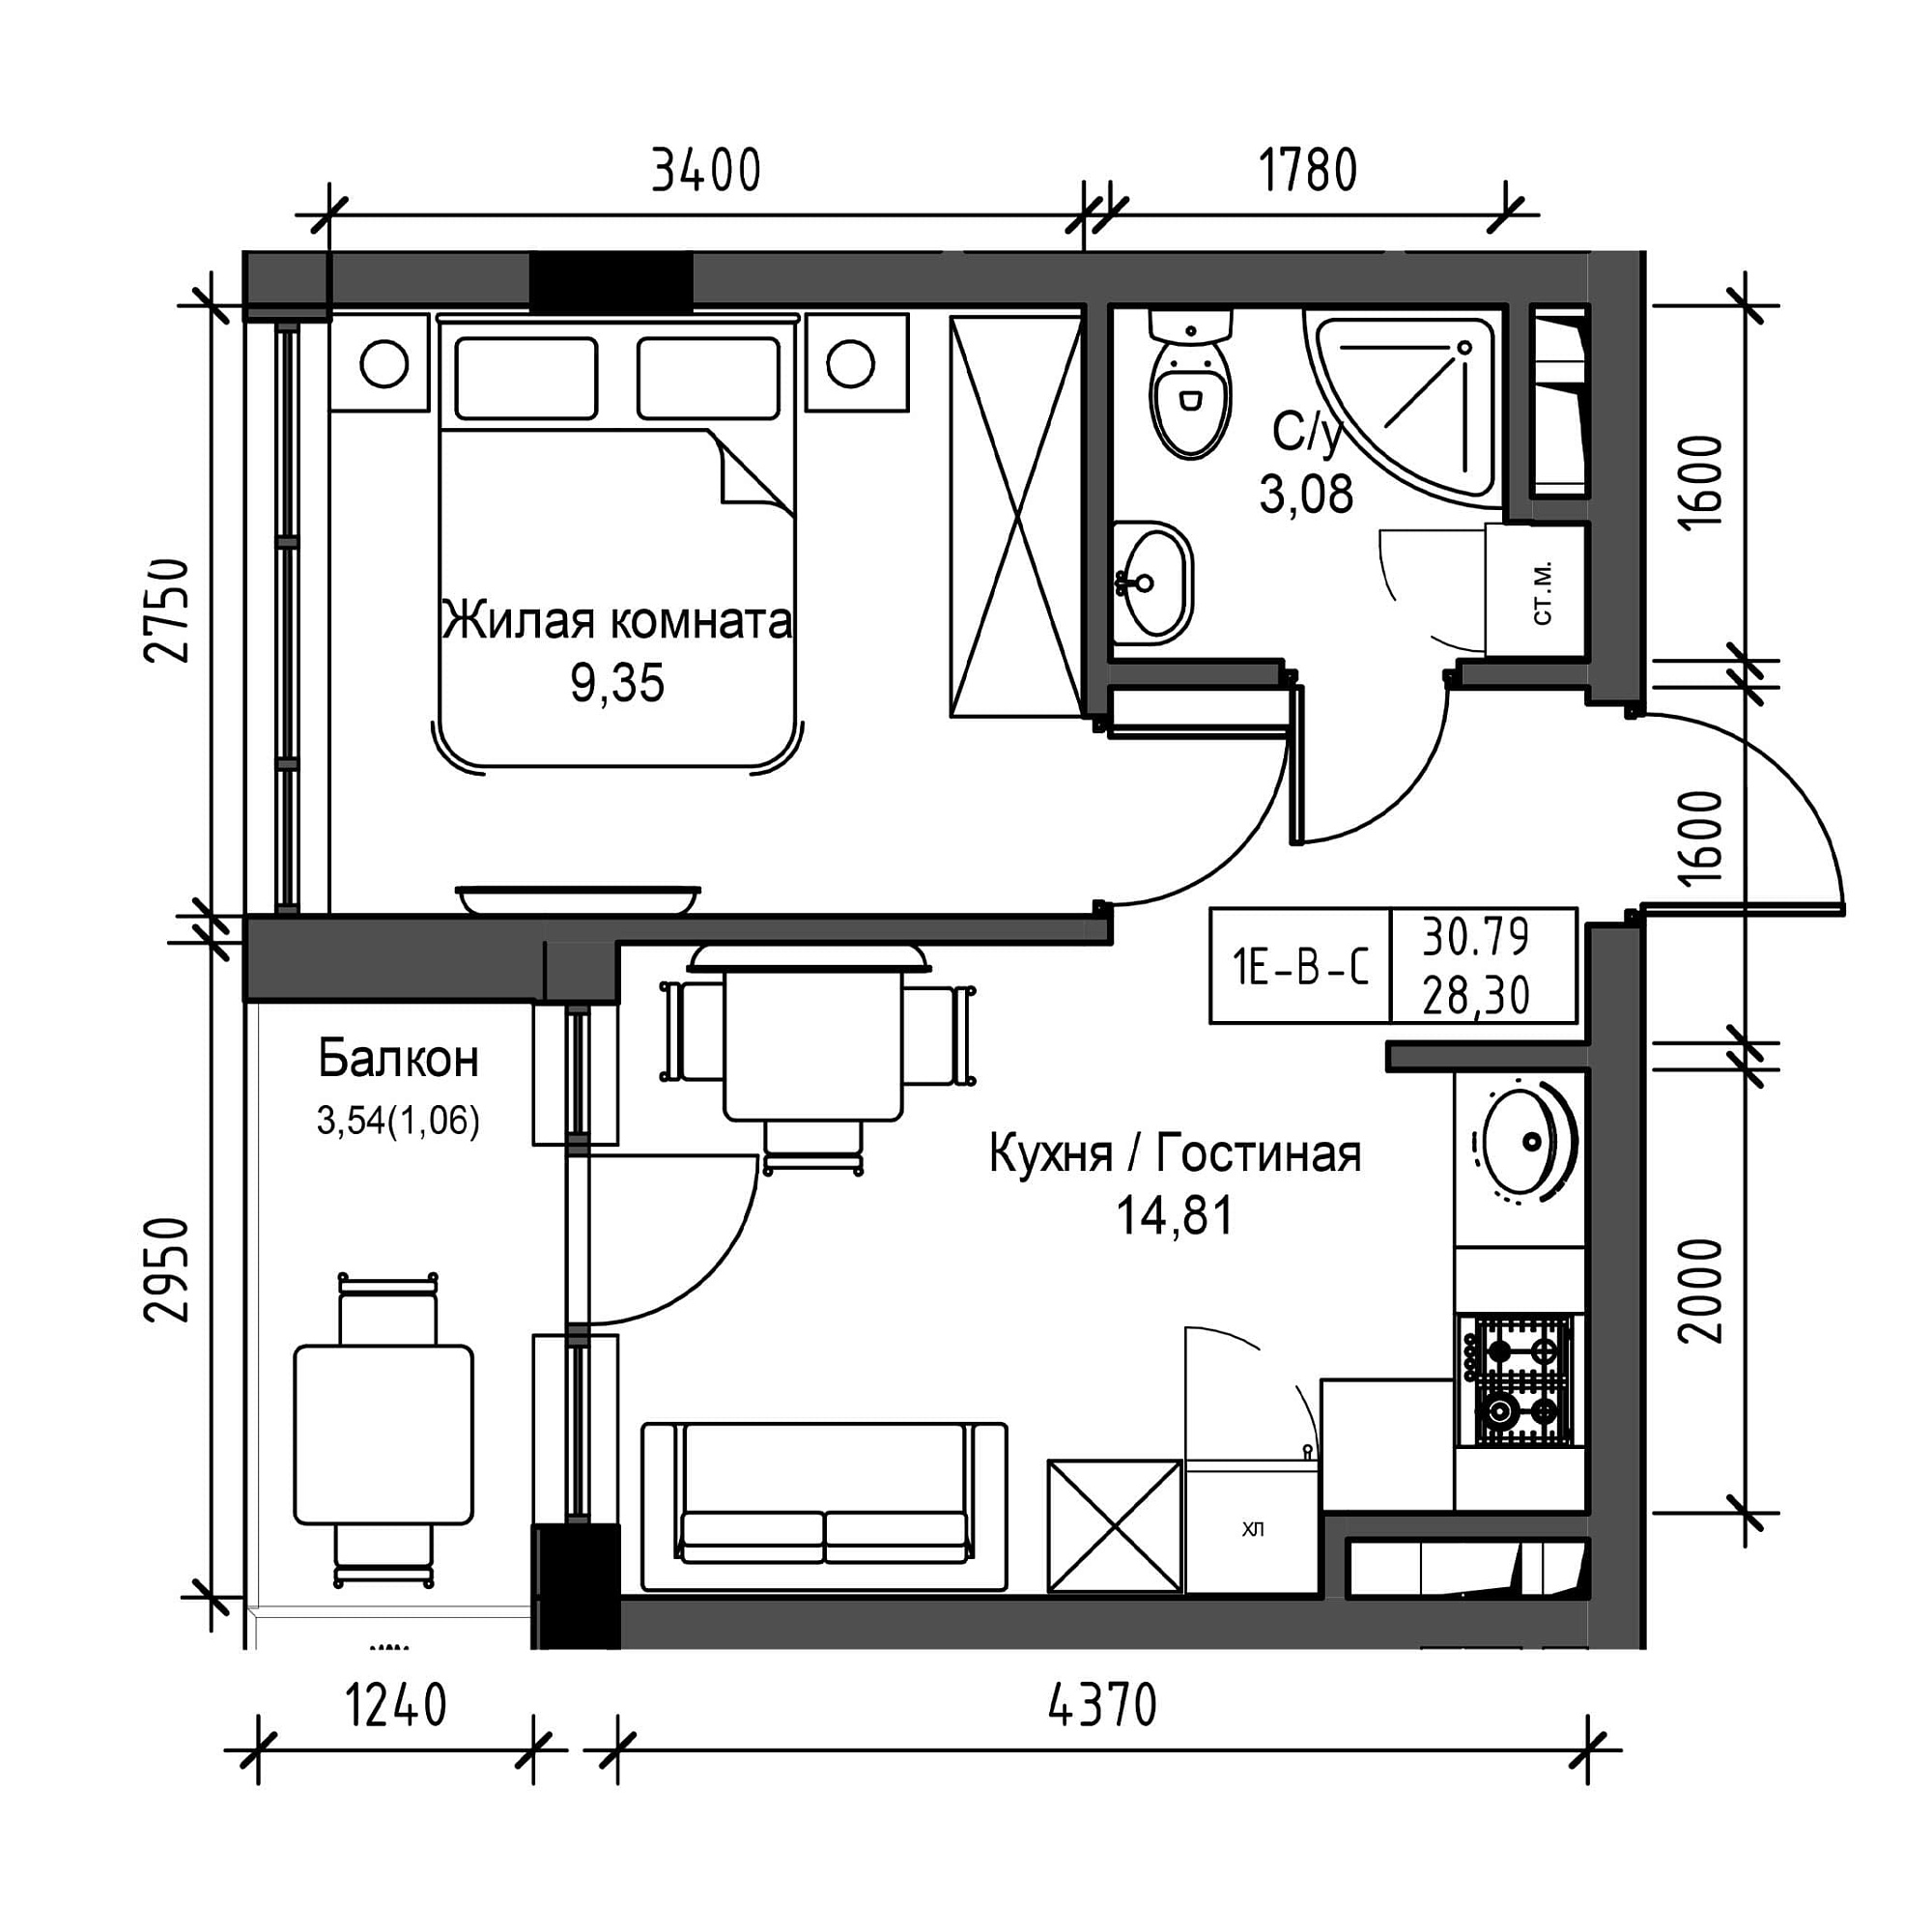 Планування 1-к квартира площею 28.3м2, UM-001-03/0015.